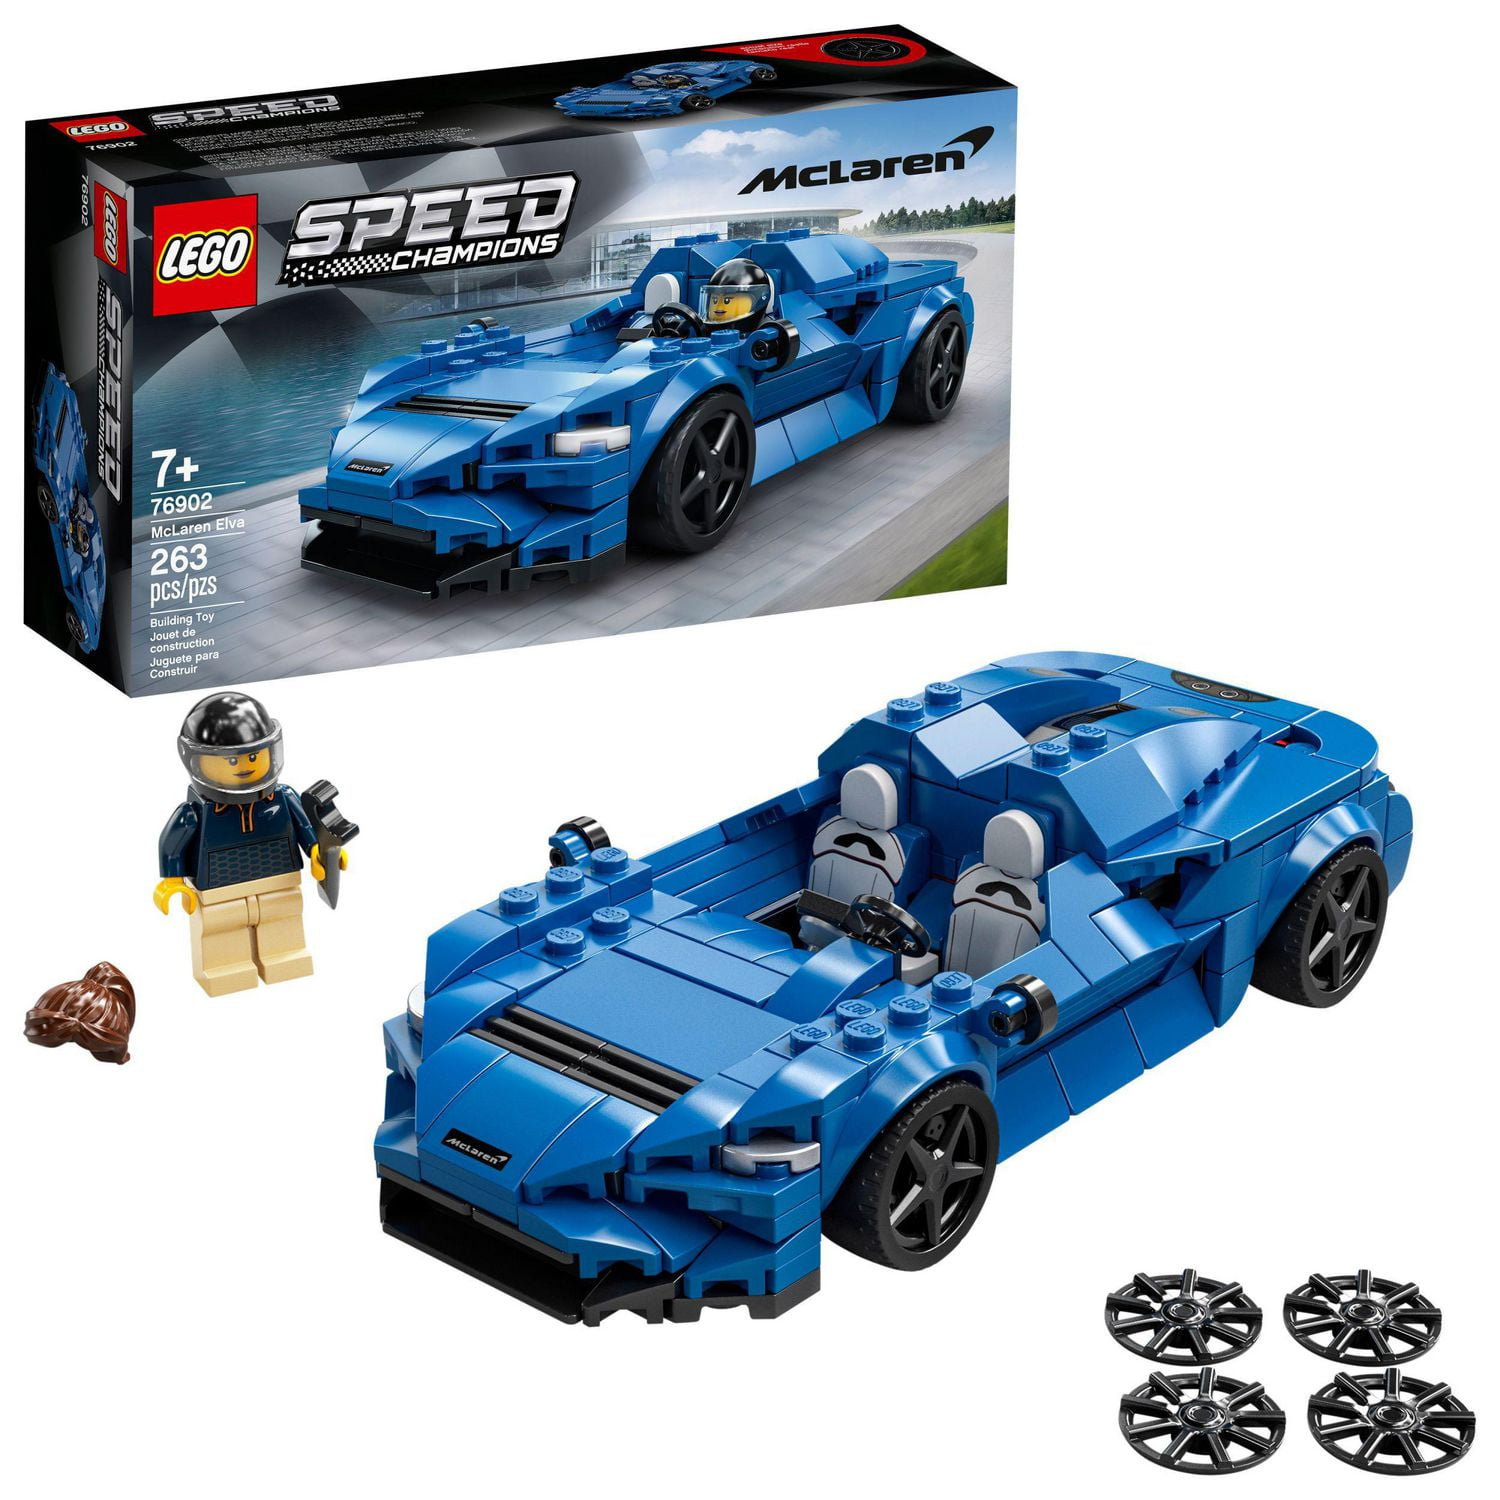 LEGO Speed Champions McLaren Elva 76902 Toy Building Kit (263 Pieces)